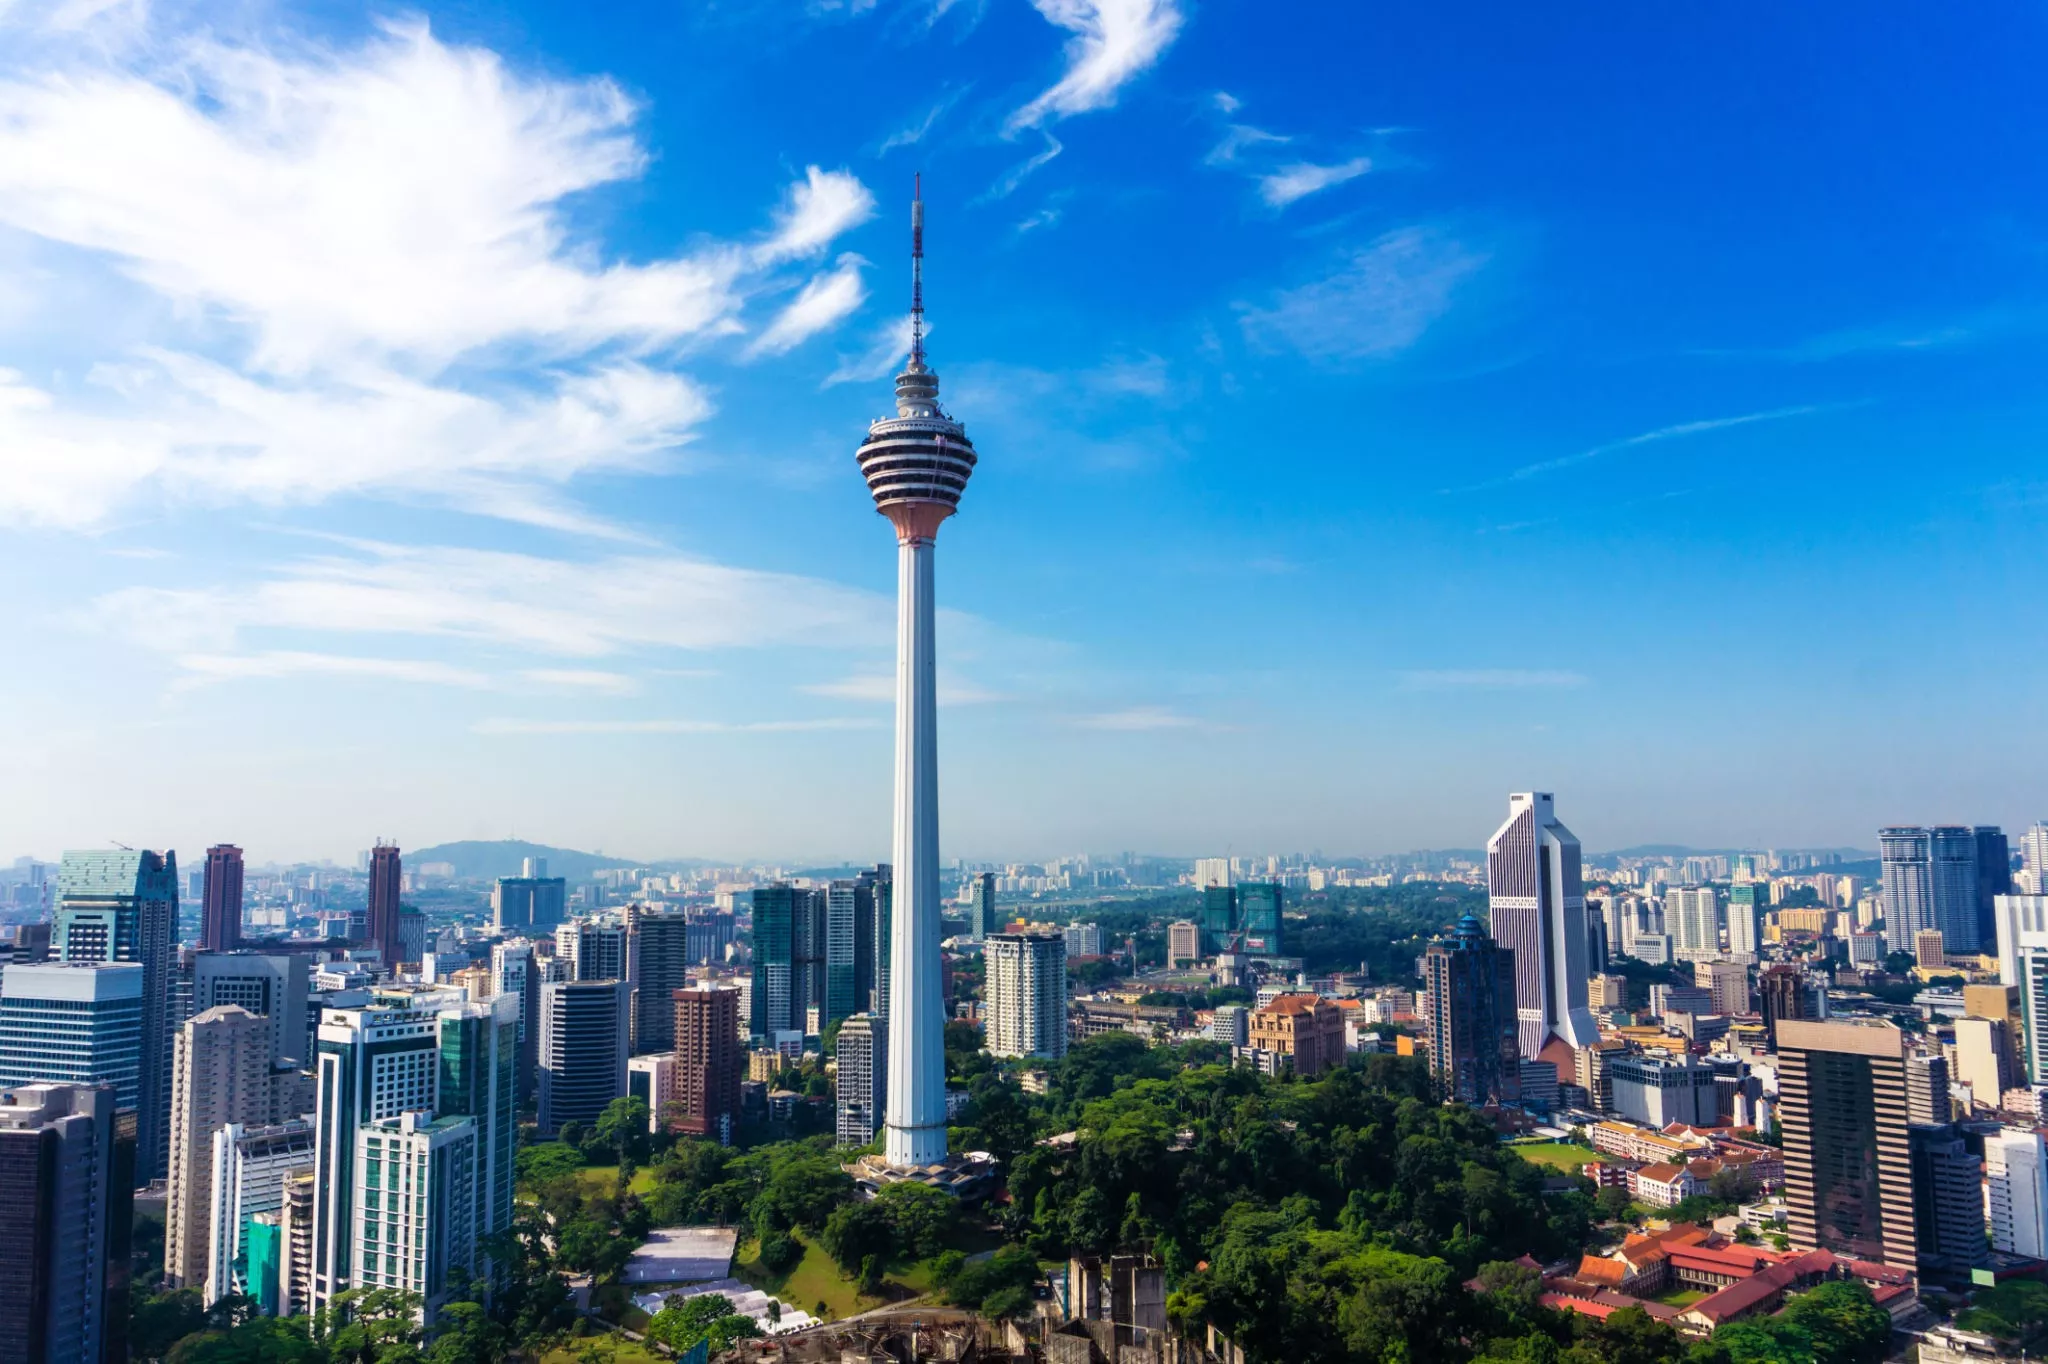 Menara Kuala Lumpur in Malaysia, East Asia | Observation Decks - Rated 4.1